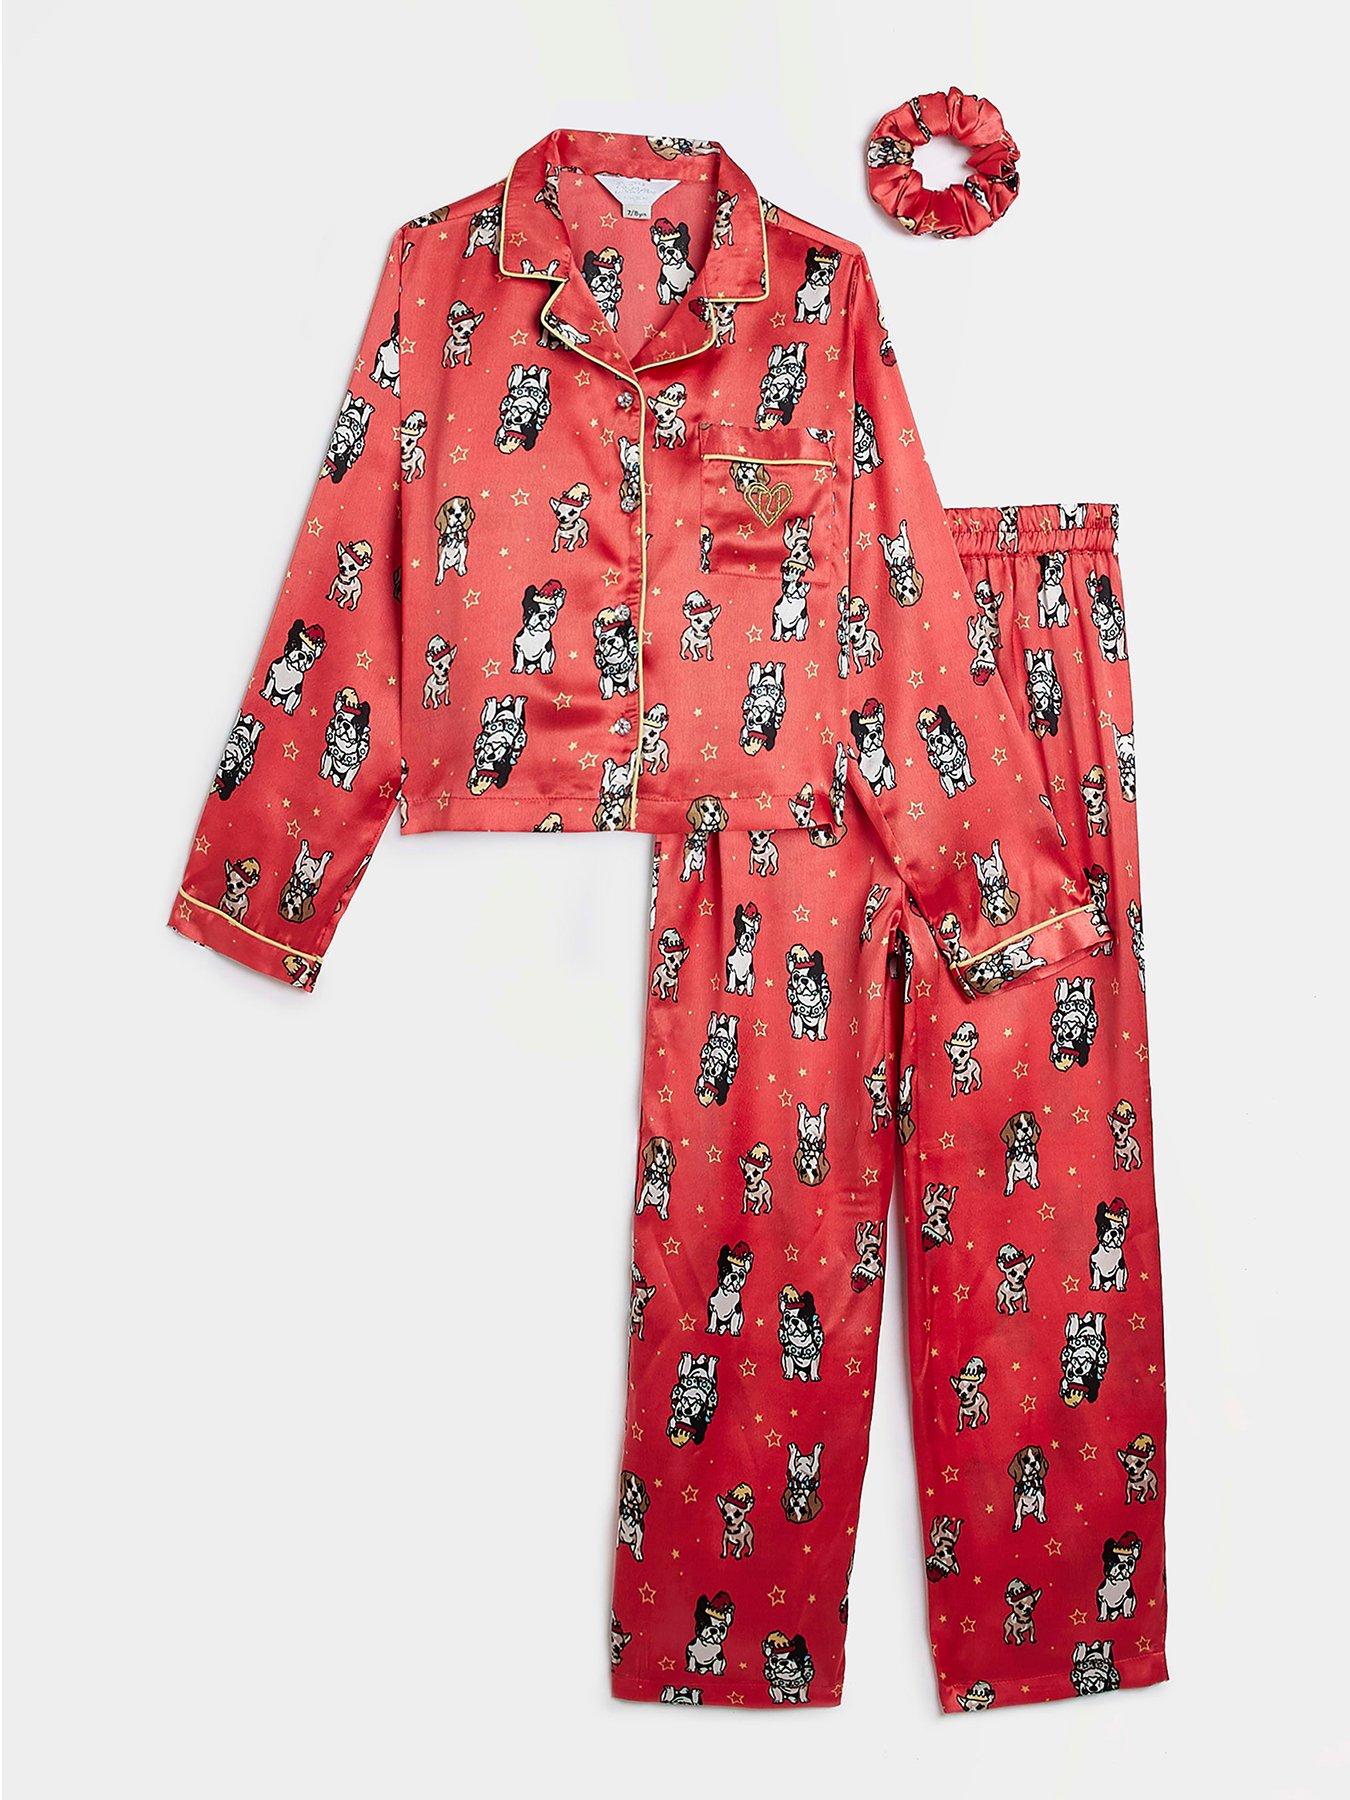 River Island Girls Clothing Loungewear Pajamas Girls Striped Satin Playsuit pyjama Set 